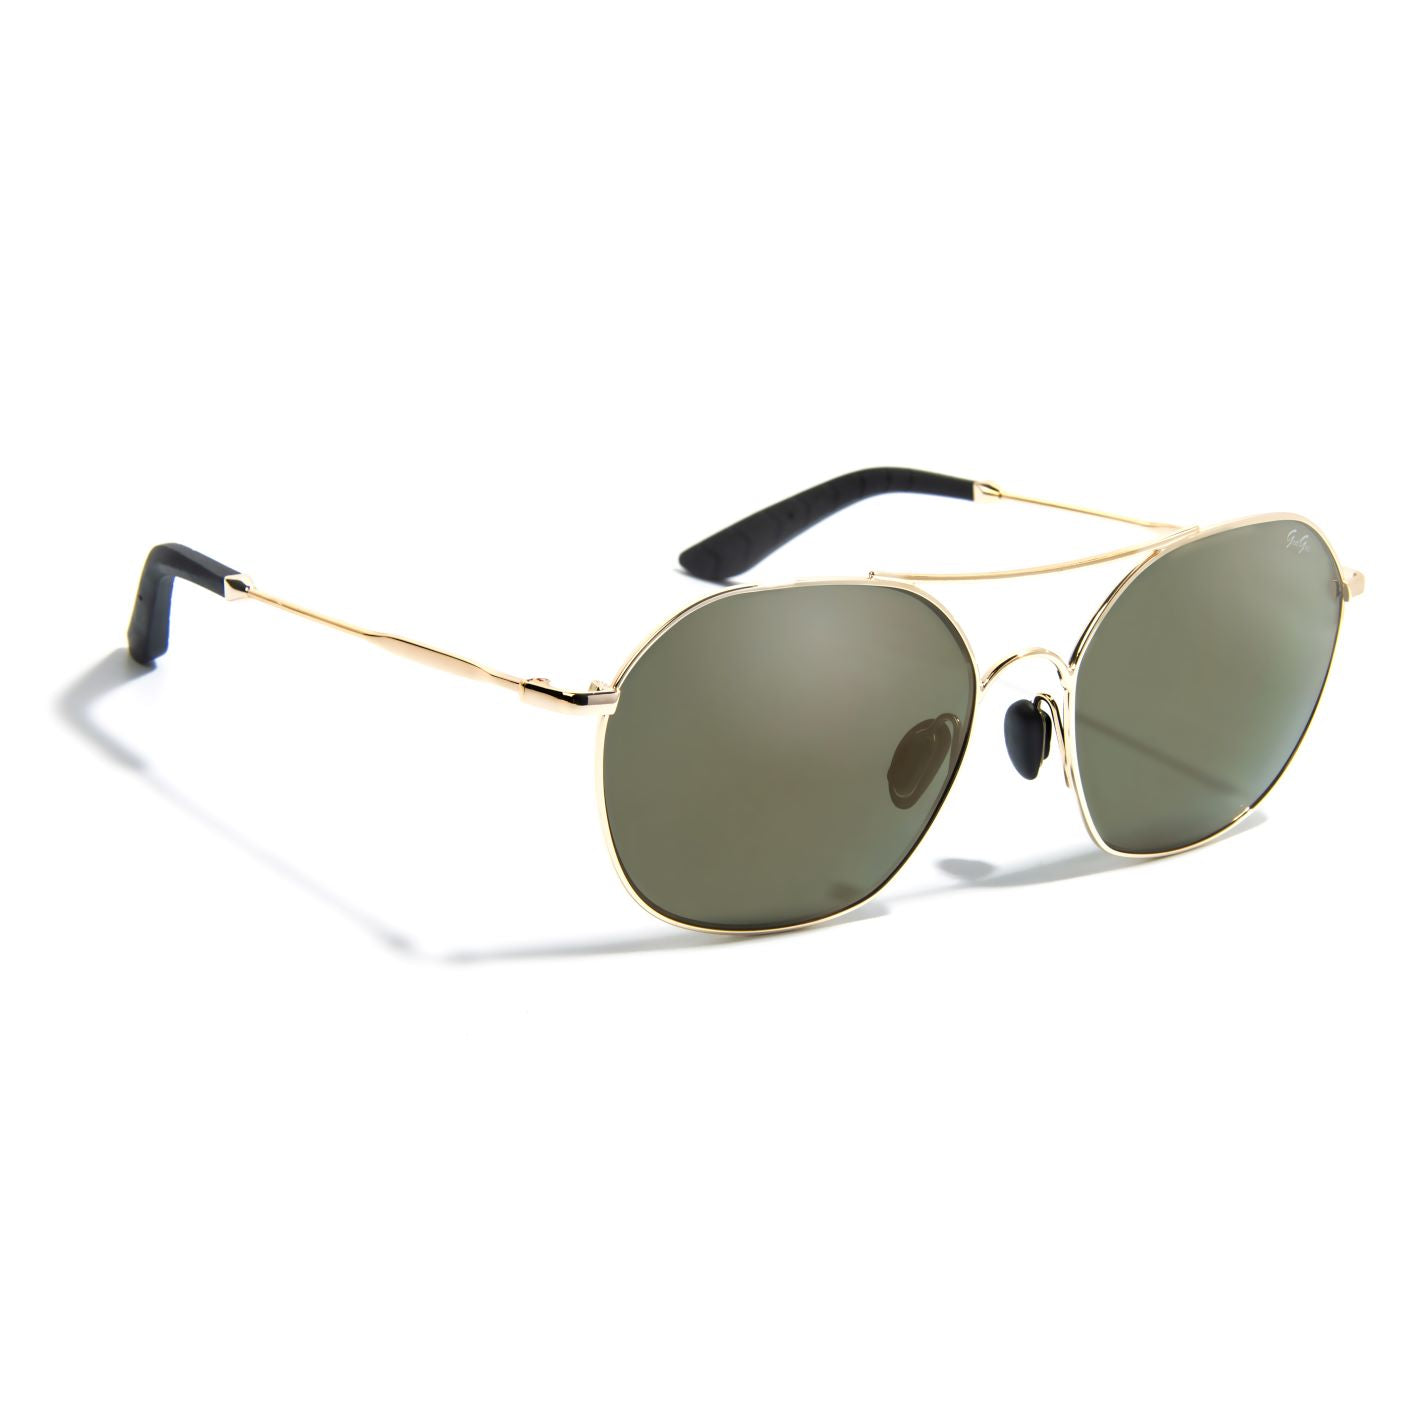 Gidgee Eyewear - Cadence Classic Sunglasses